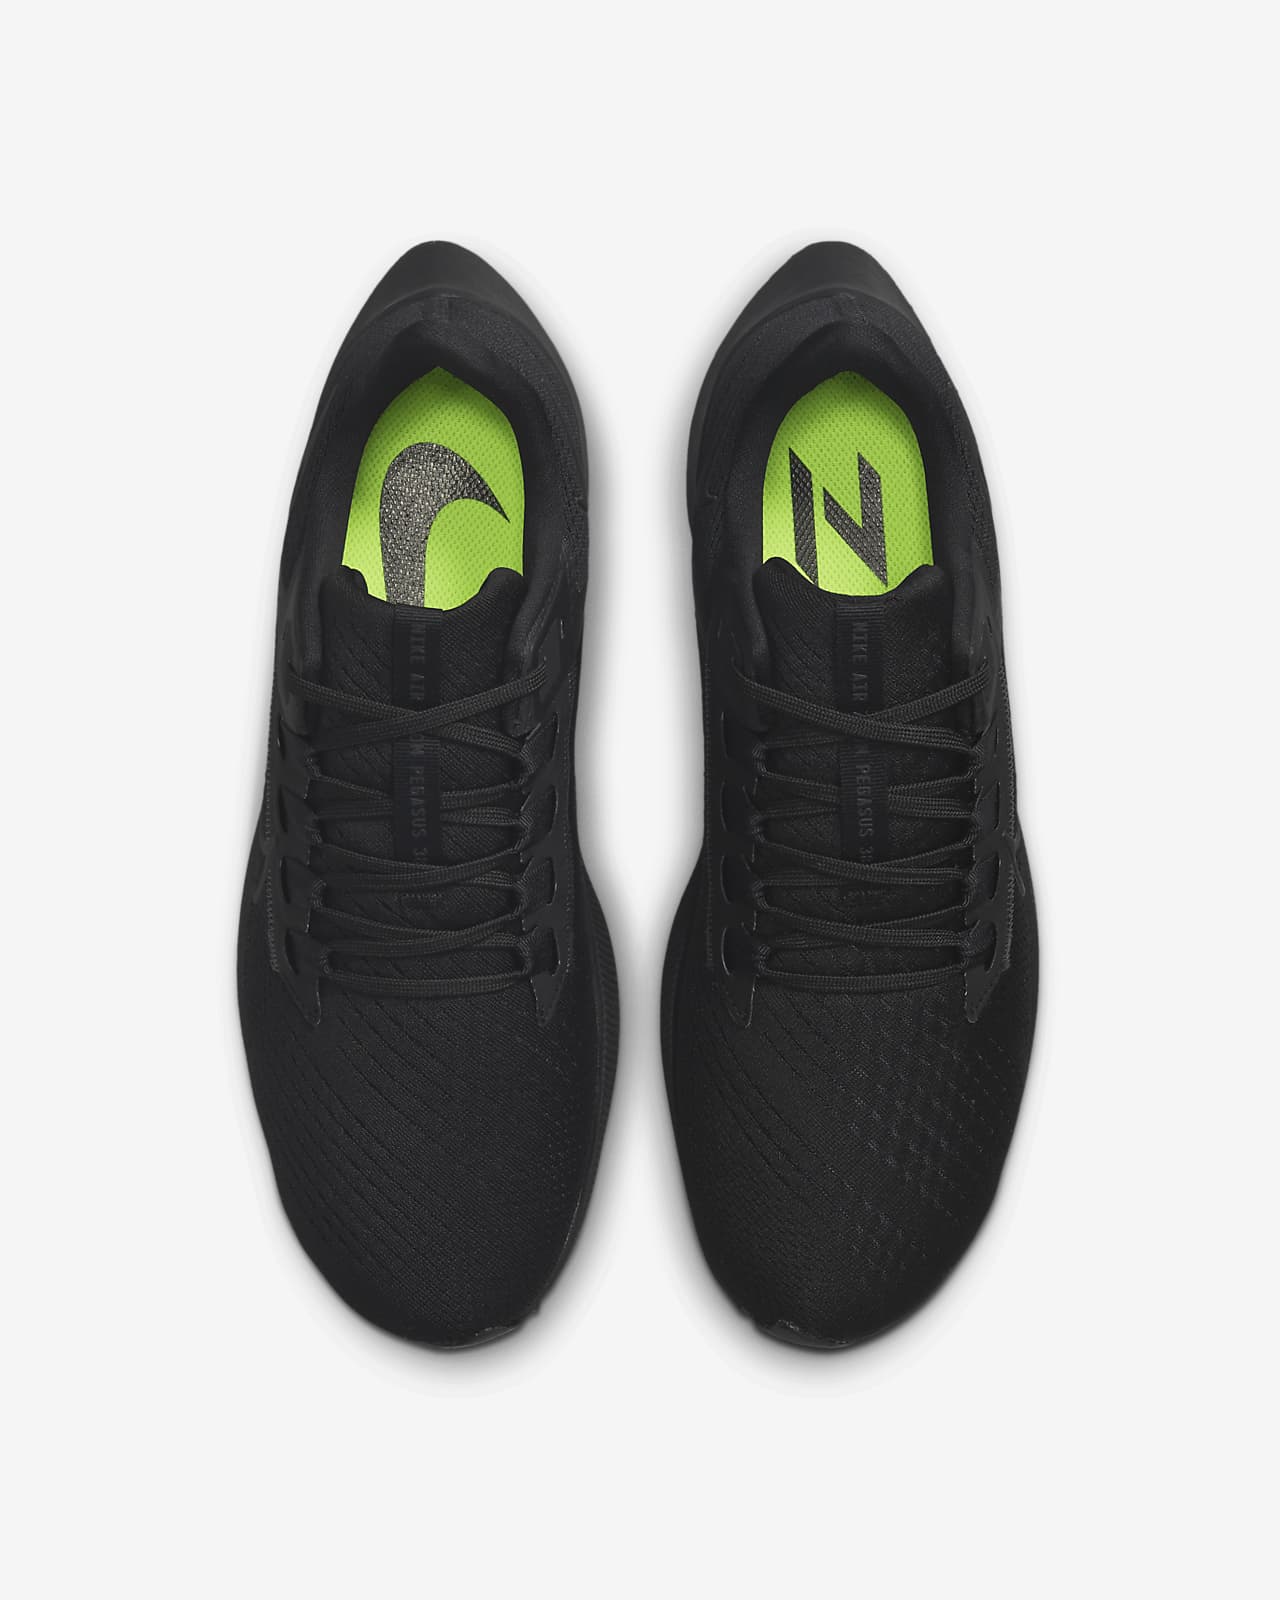 Nike Pegasus Men's Road Running Shoes.